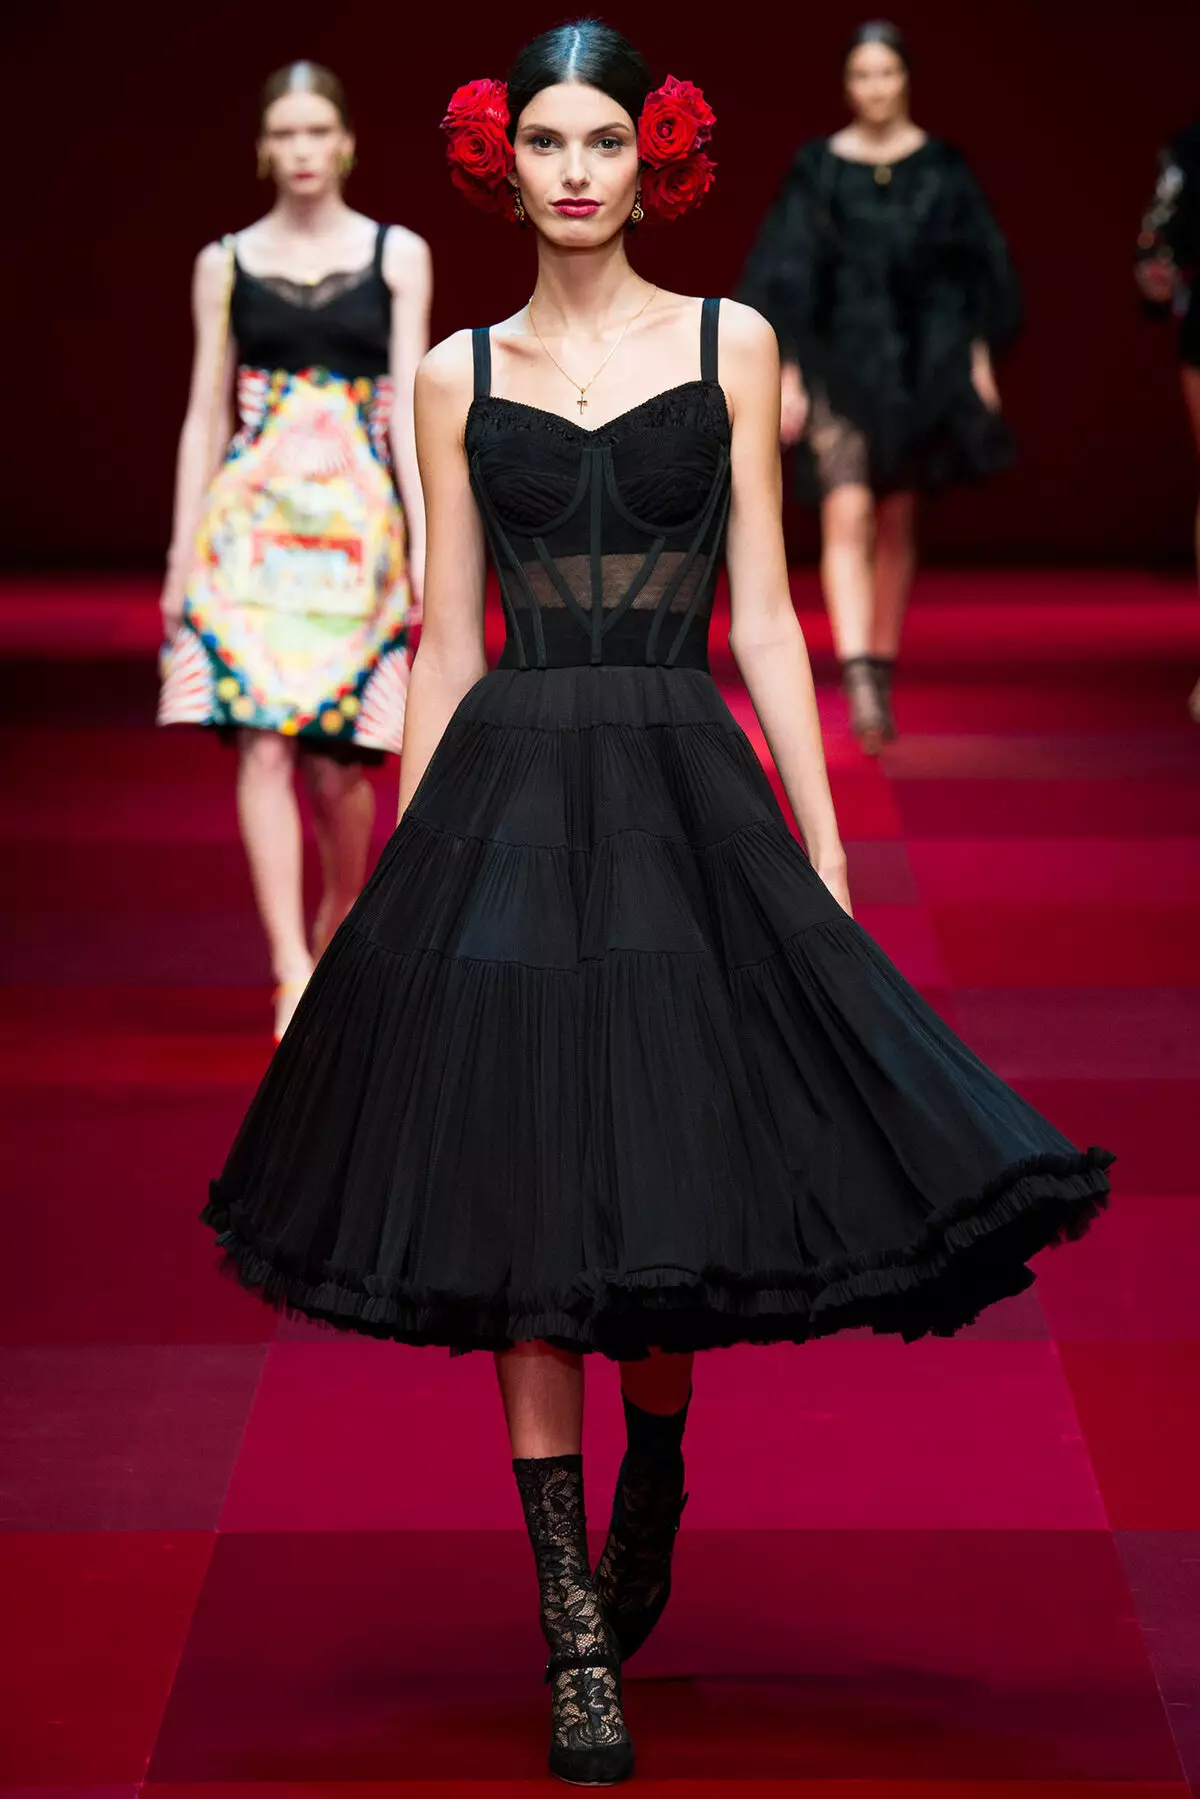 Fashionable Black Dress na may Corset.